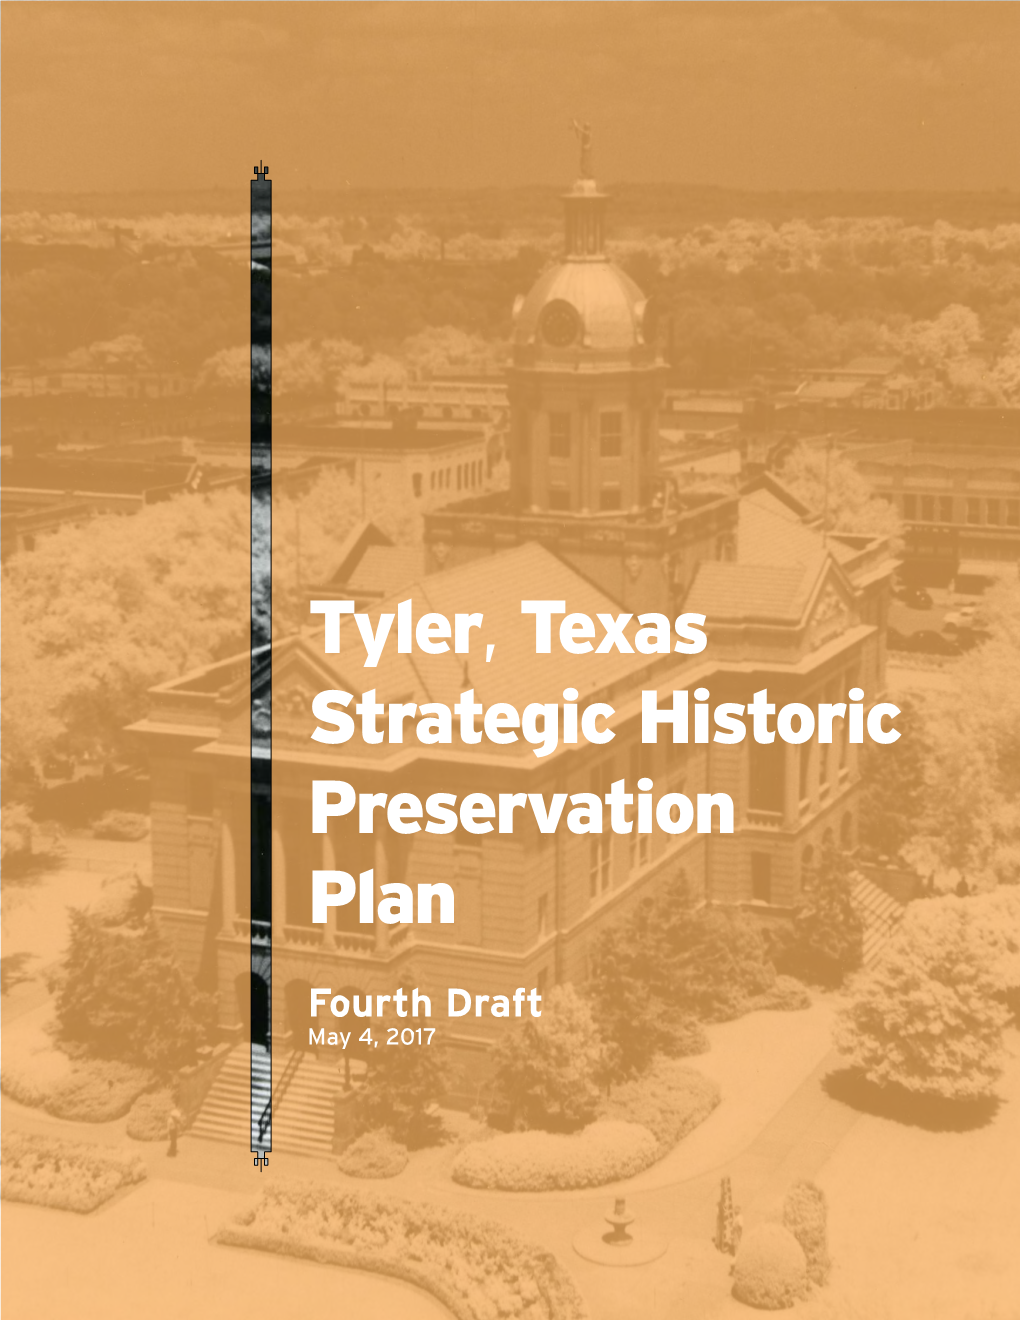 Tyler, Texas Strategic Historic Preservation Plan